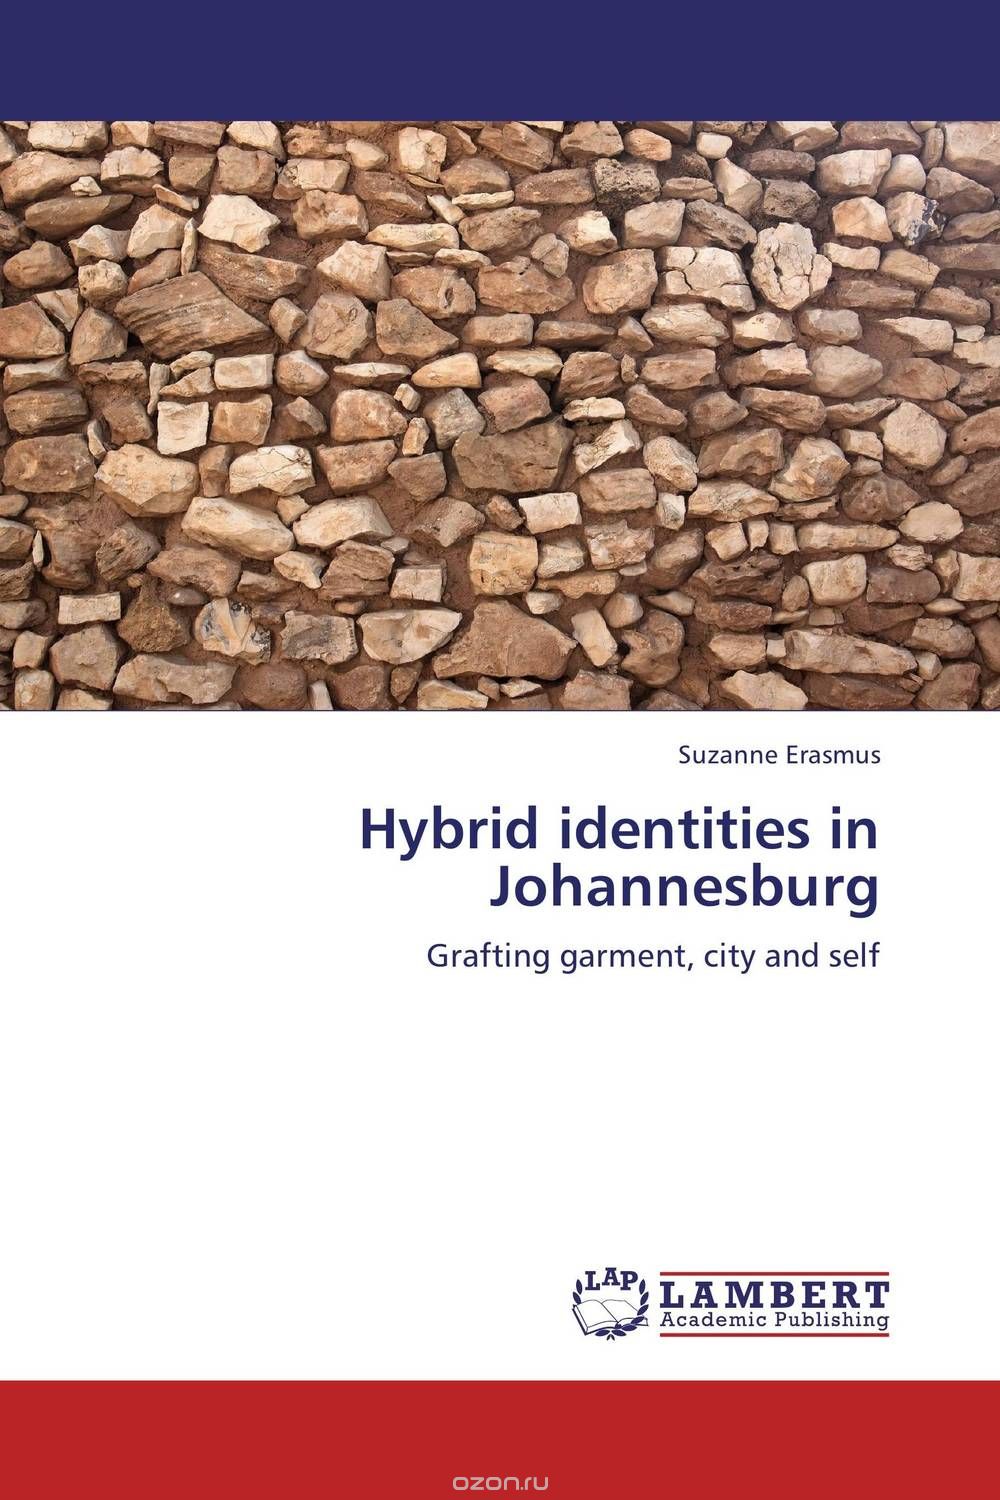 Скачать книгу "Hybrid identities in Johannesburg"